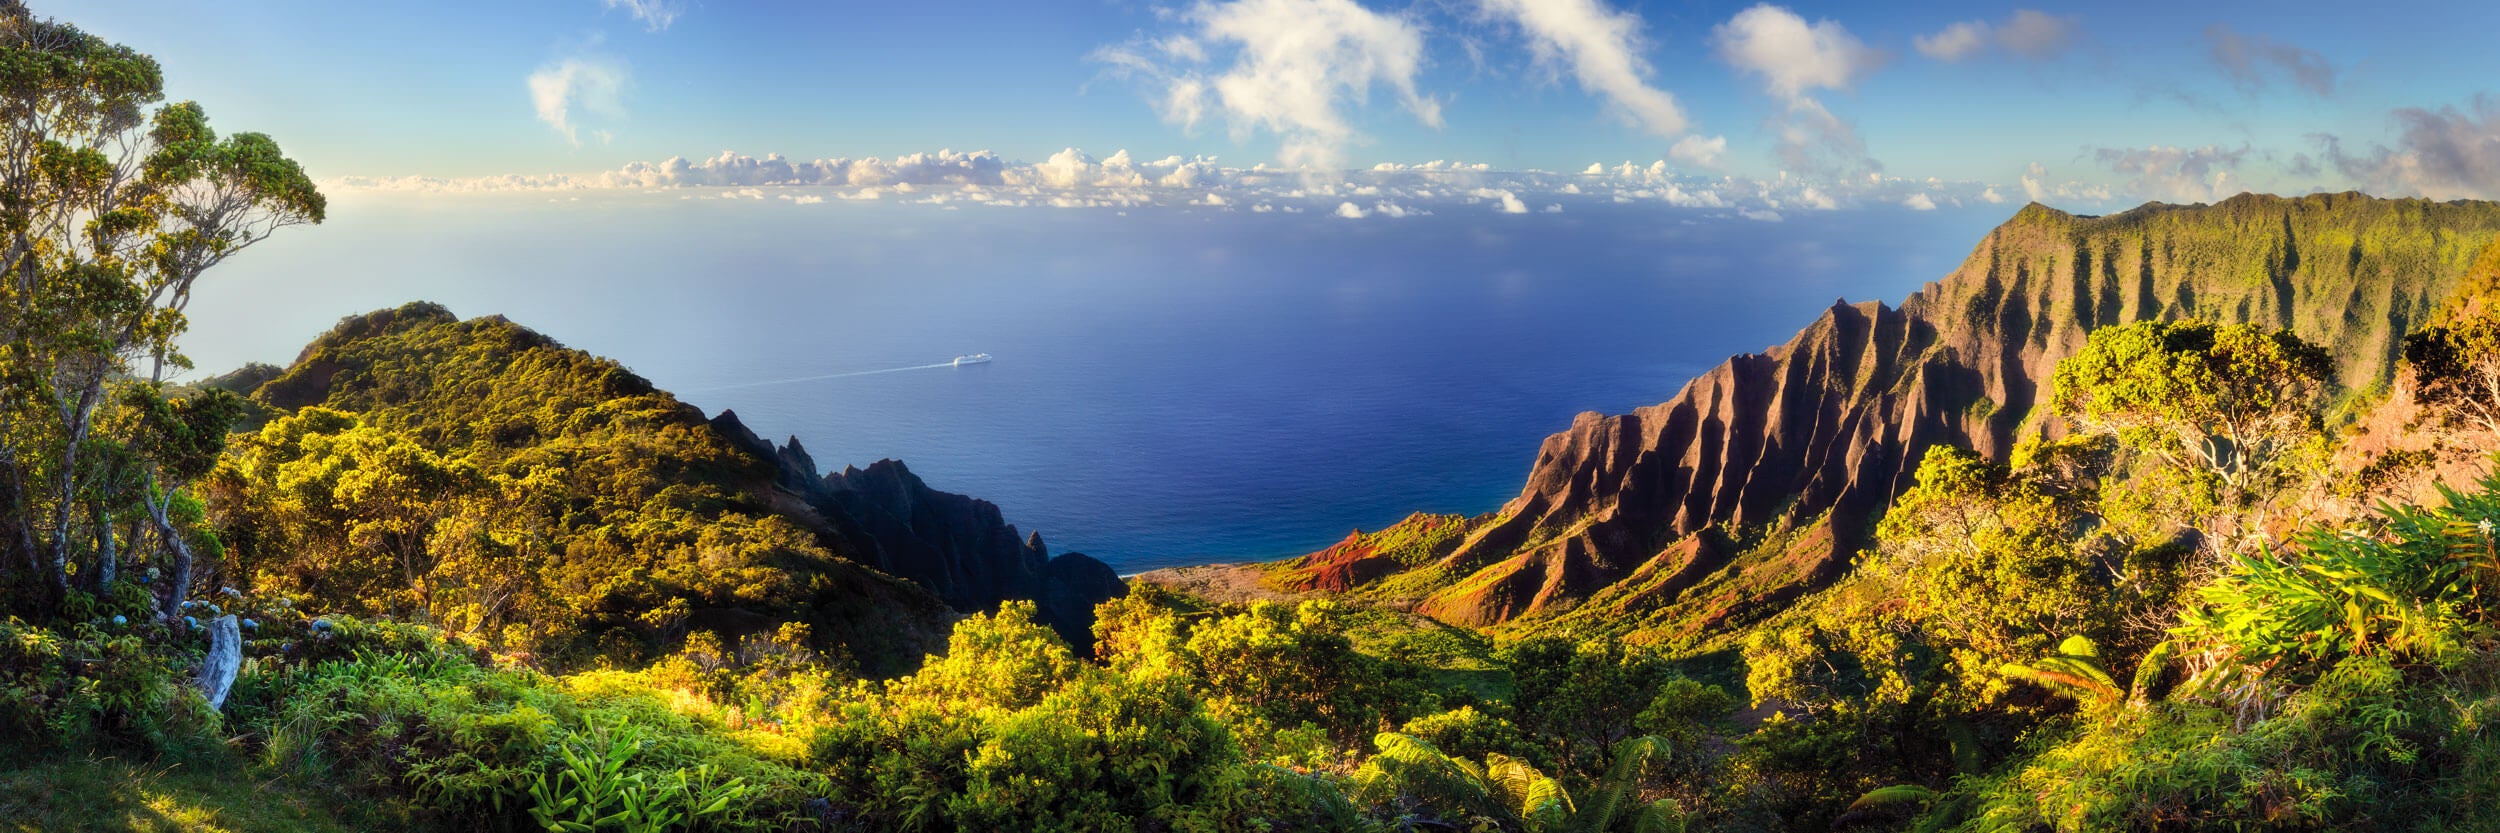 A Napali Coast picture shows the Kalalau Valley on Kauai in Hawaii.